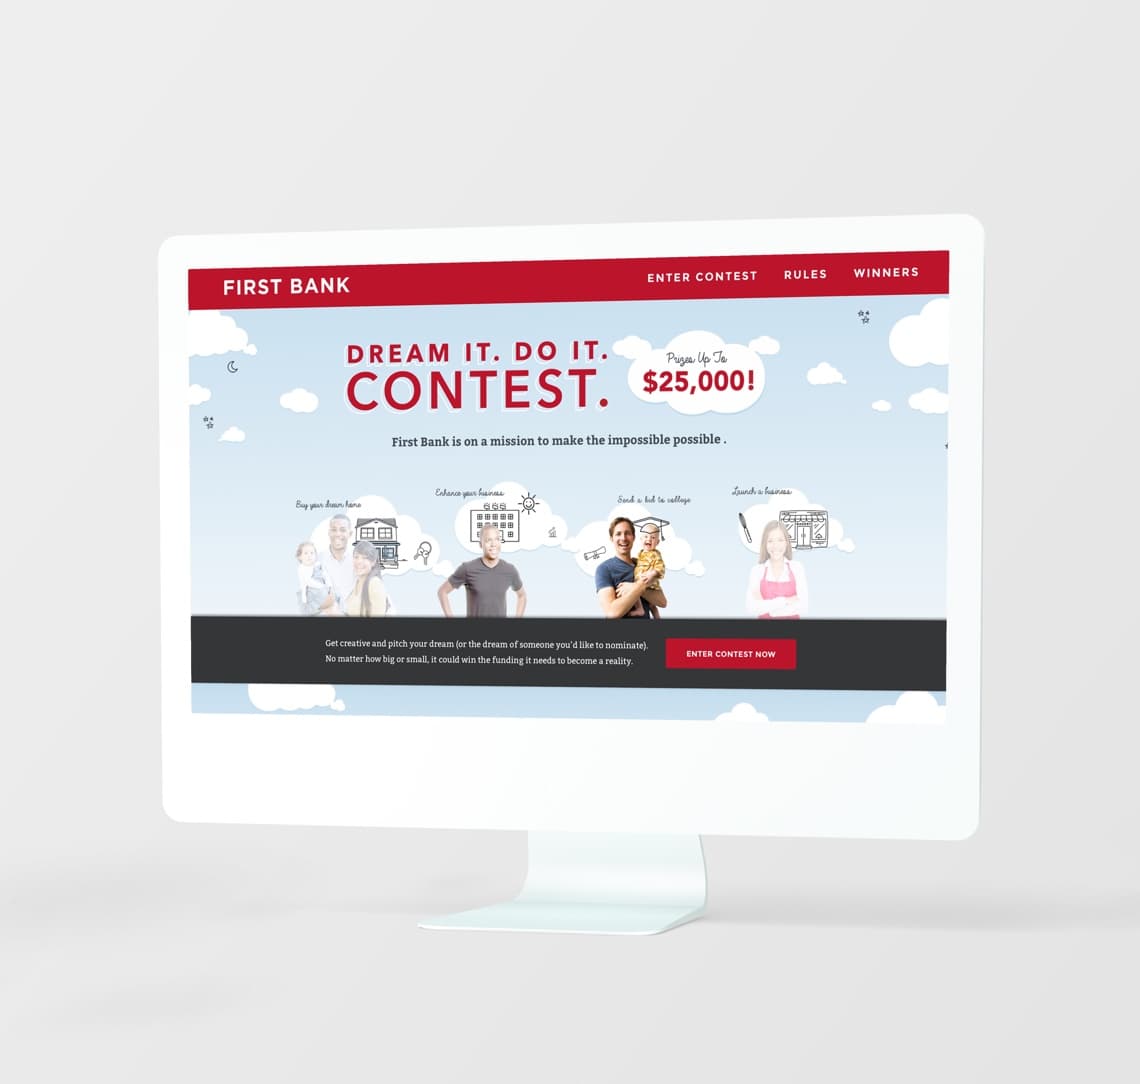 First Bank. Dream It. Do It. Contest It. on desktop